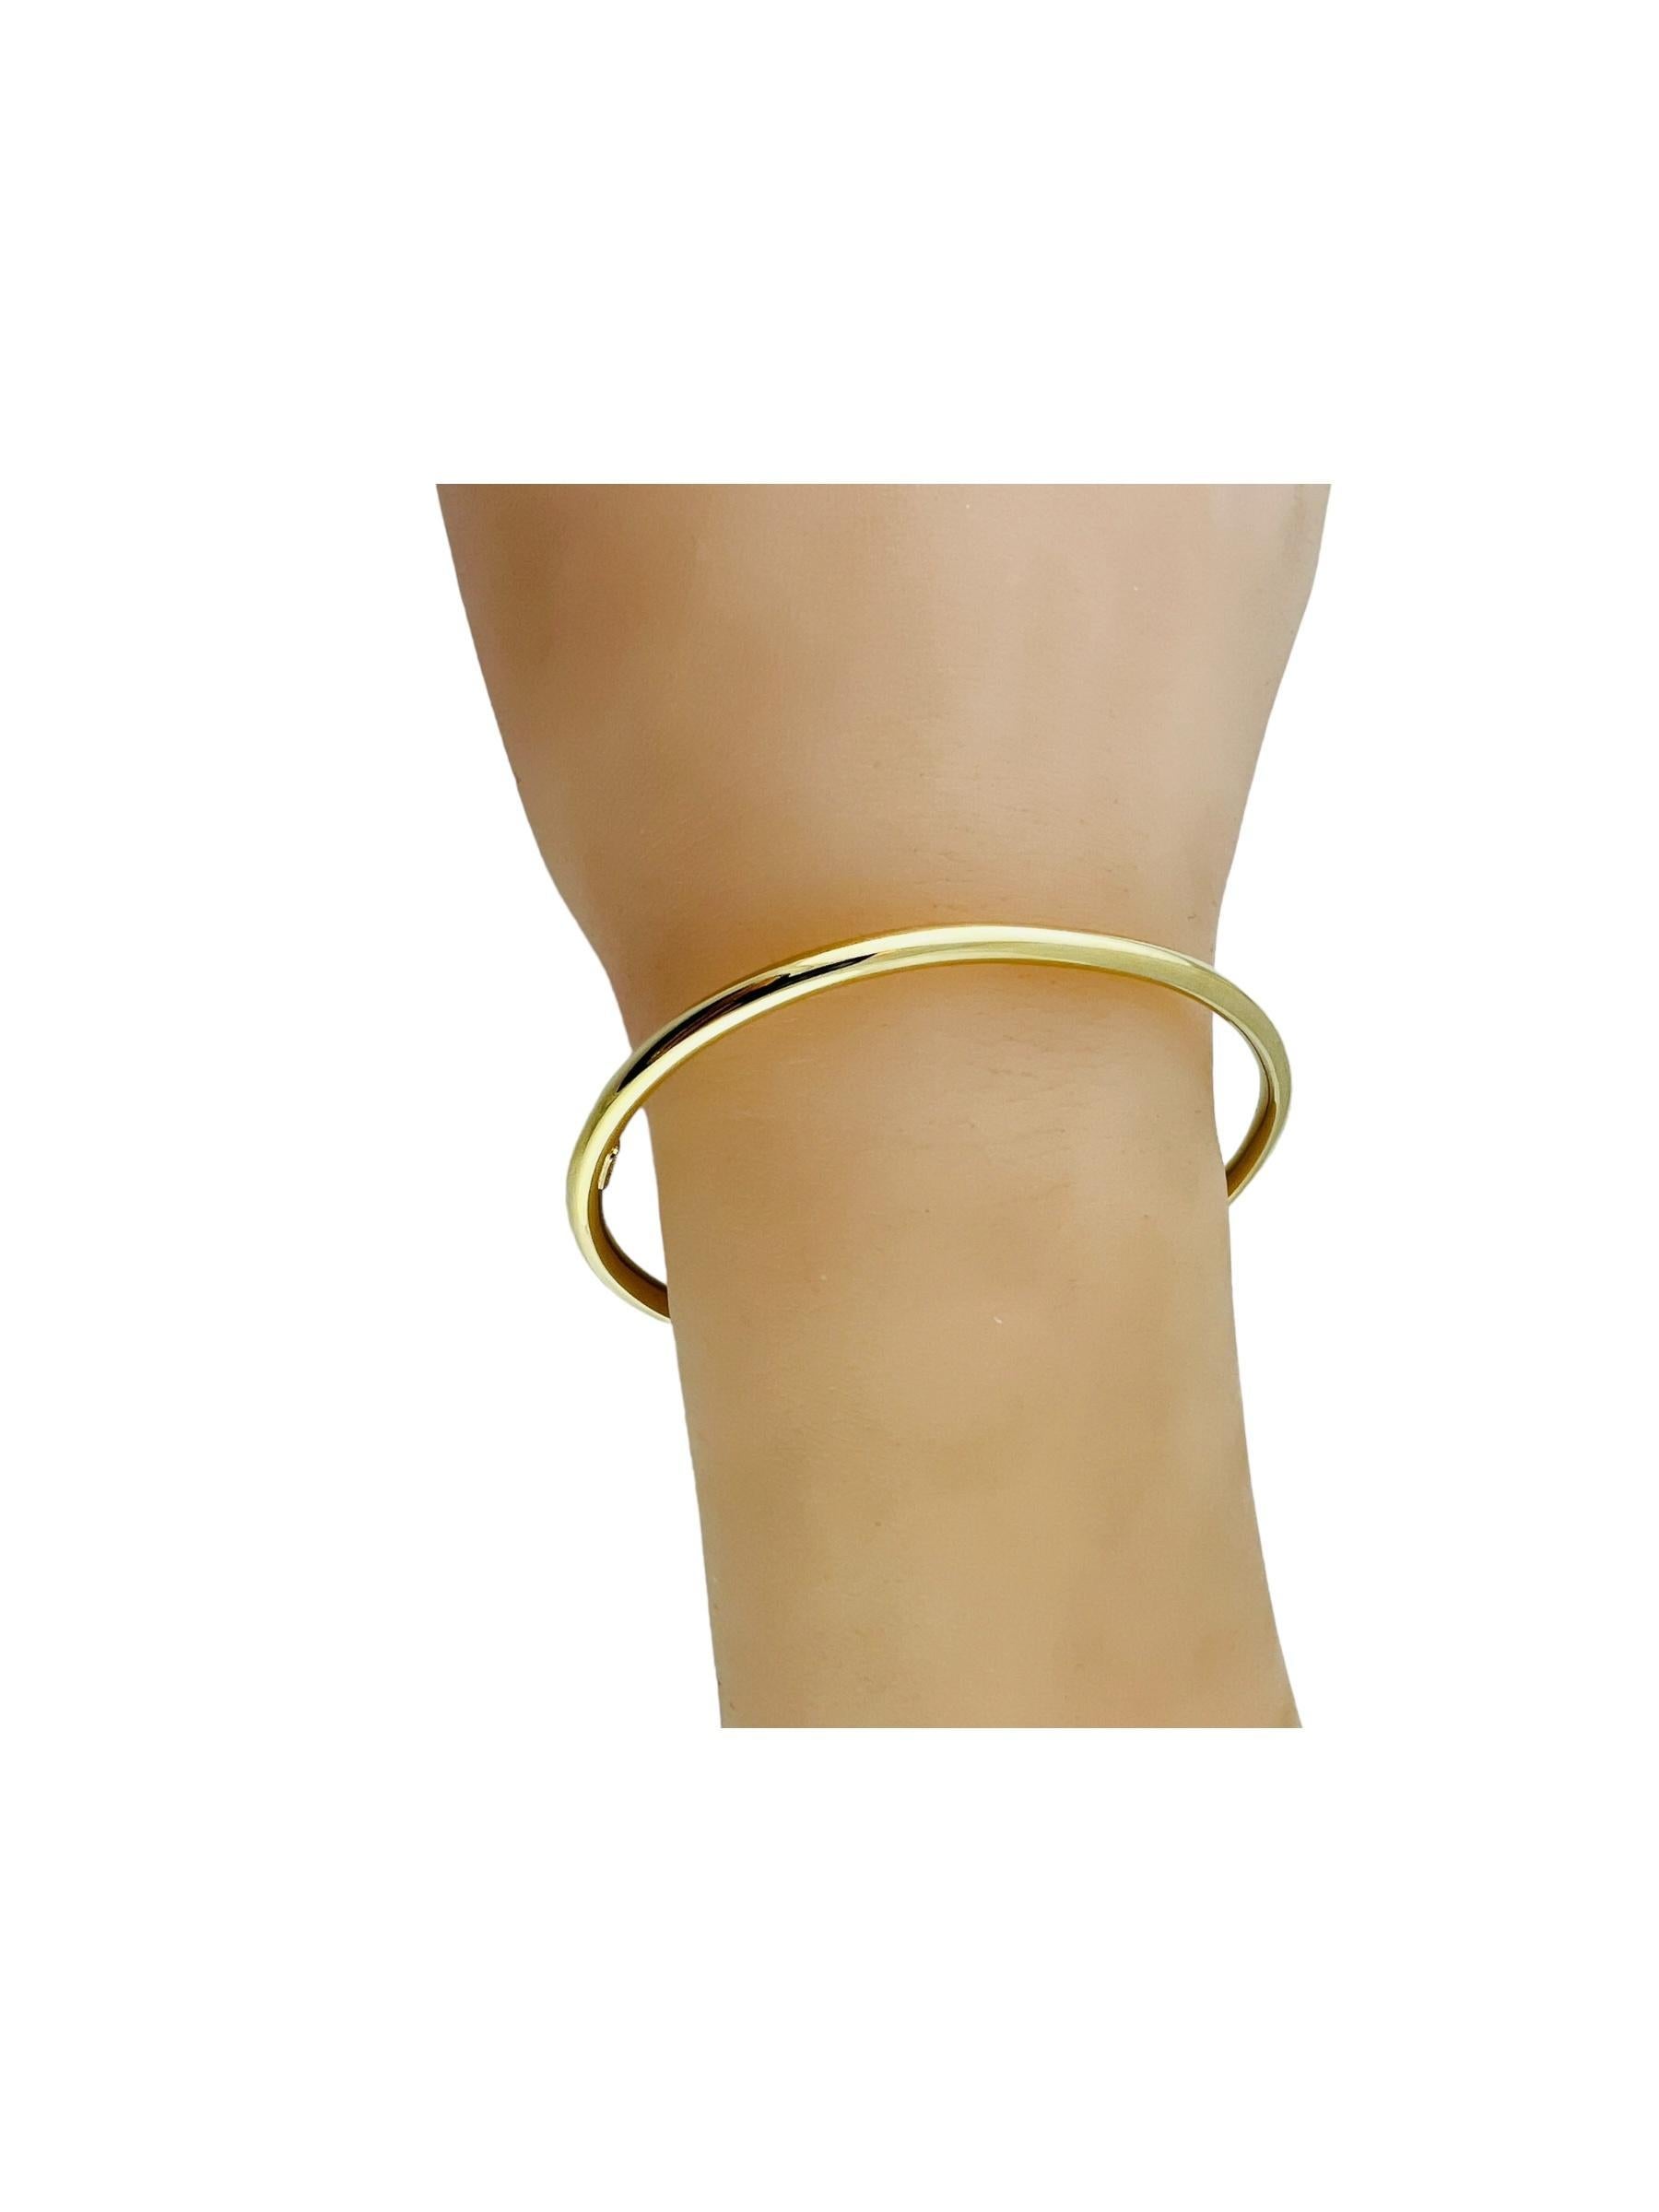 Tiffany & Co. 18K Yellow Gold Oval Bangle Bracelet #16674 4